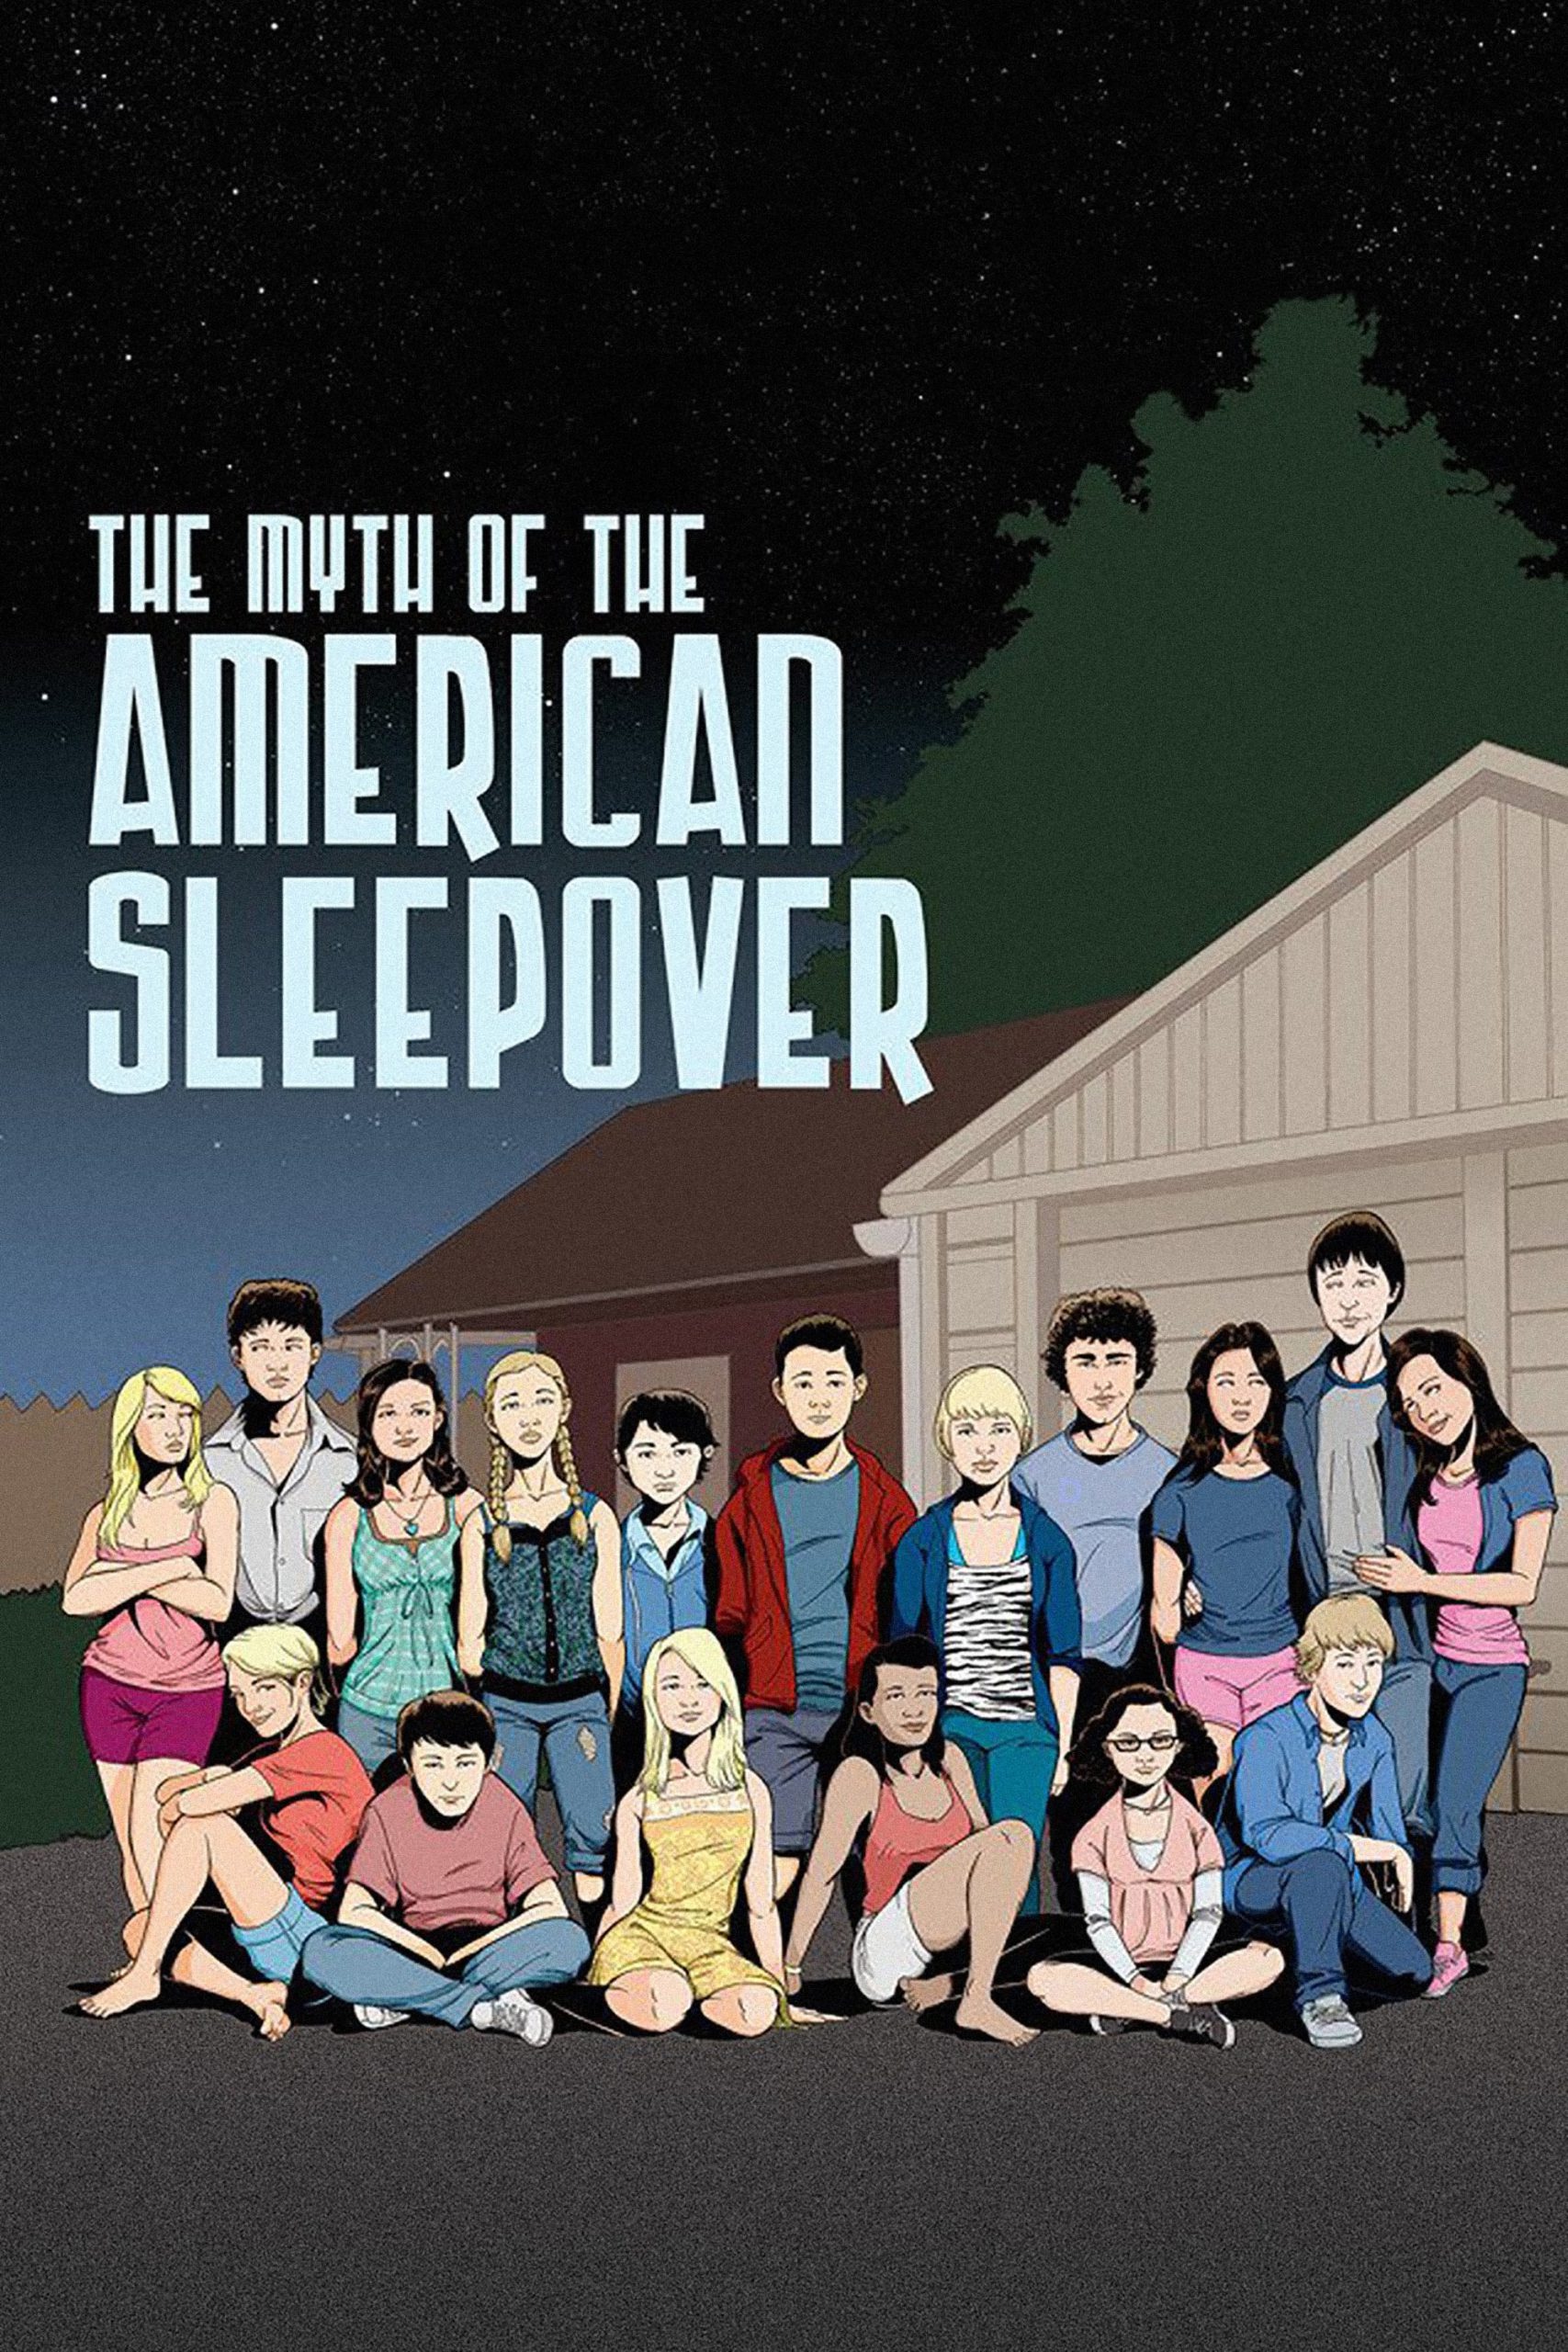 The Myth of the American Sleepover [Sub-ITA] [HD] (2010)